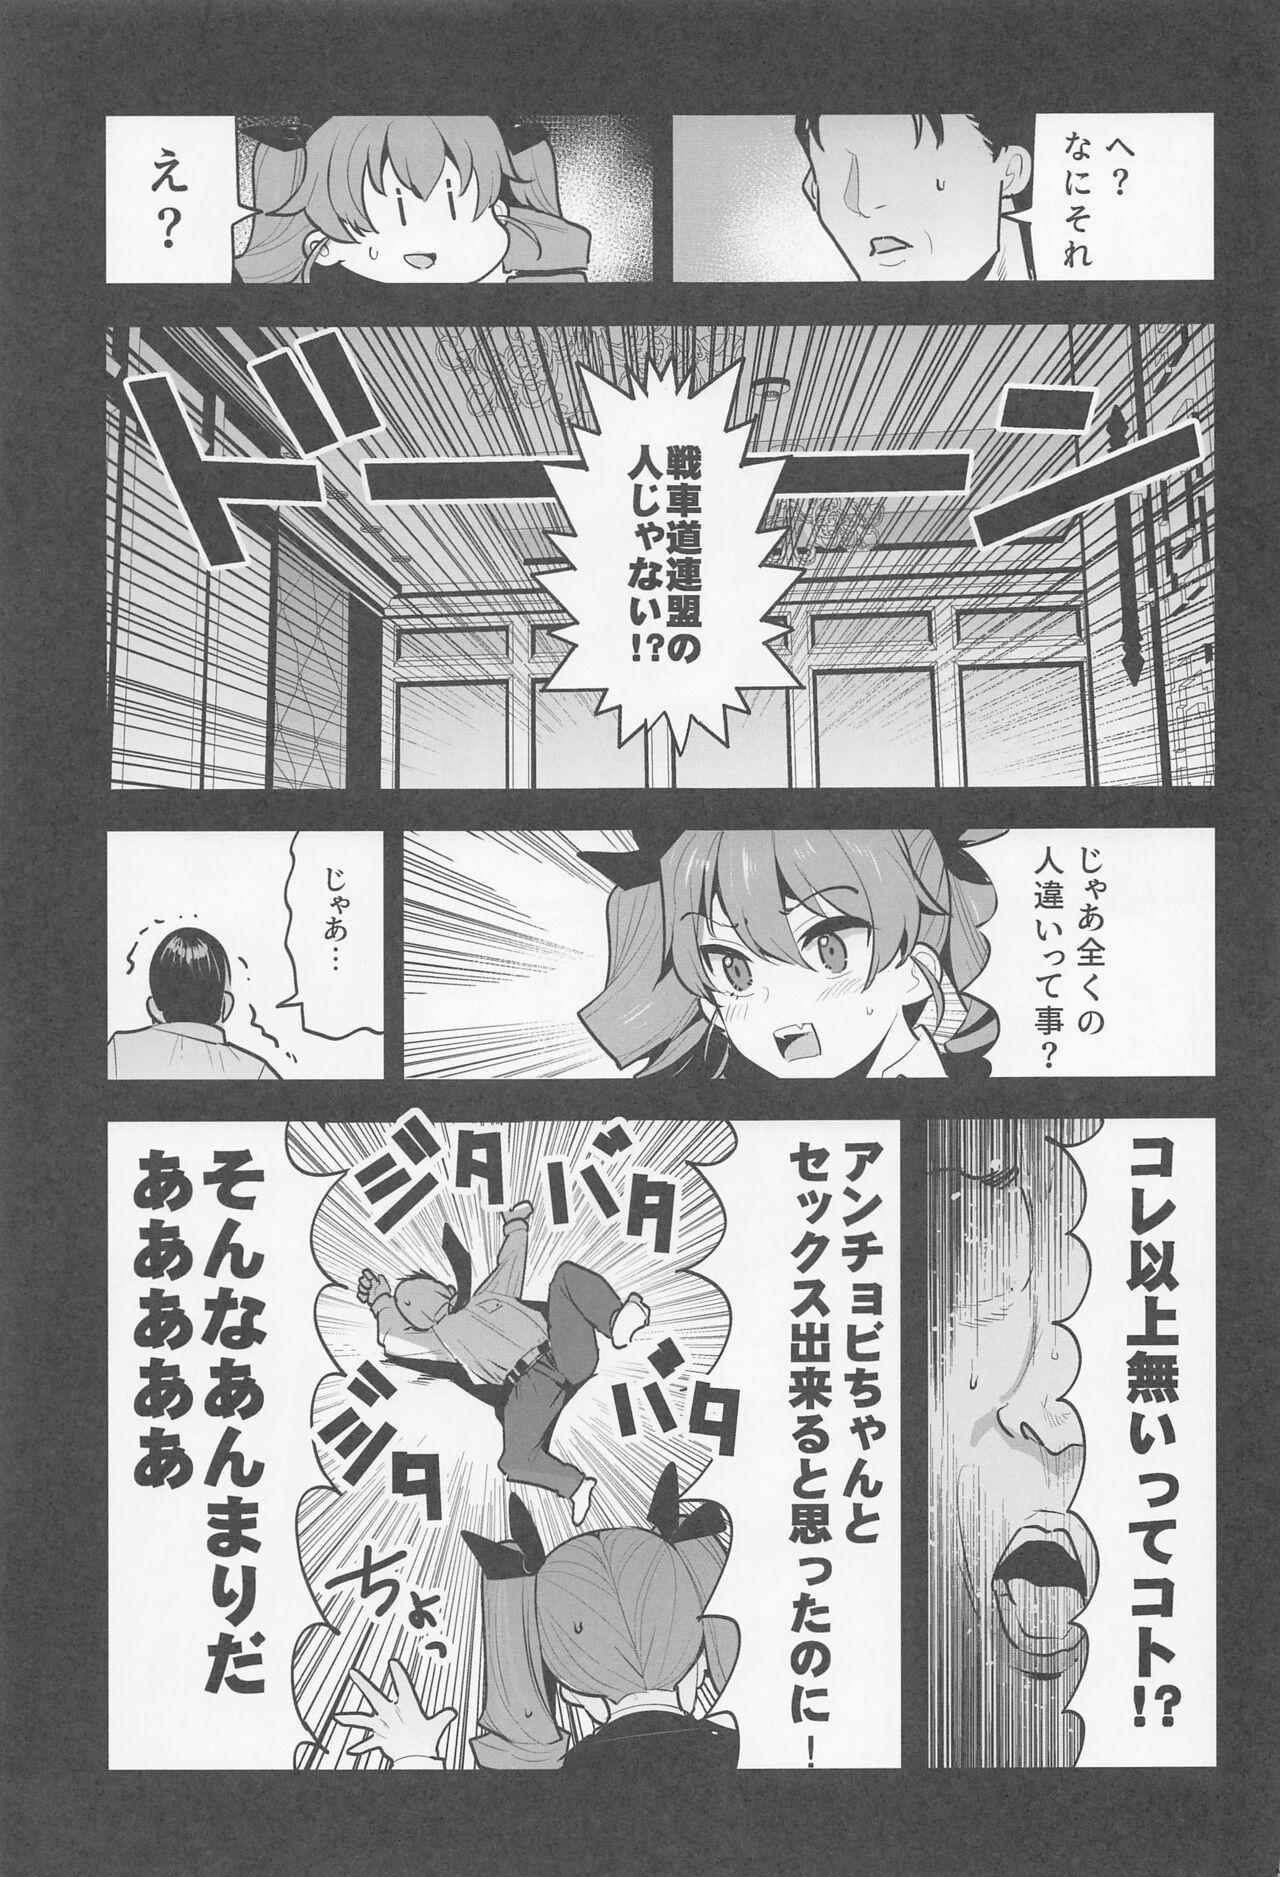 Letsdoeit anchobi dogezadeonegaishitaraippatsuyarasetekuremashita - Girls und panzer Nerd - Page 10